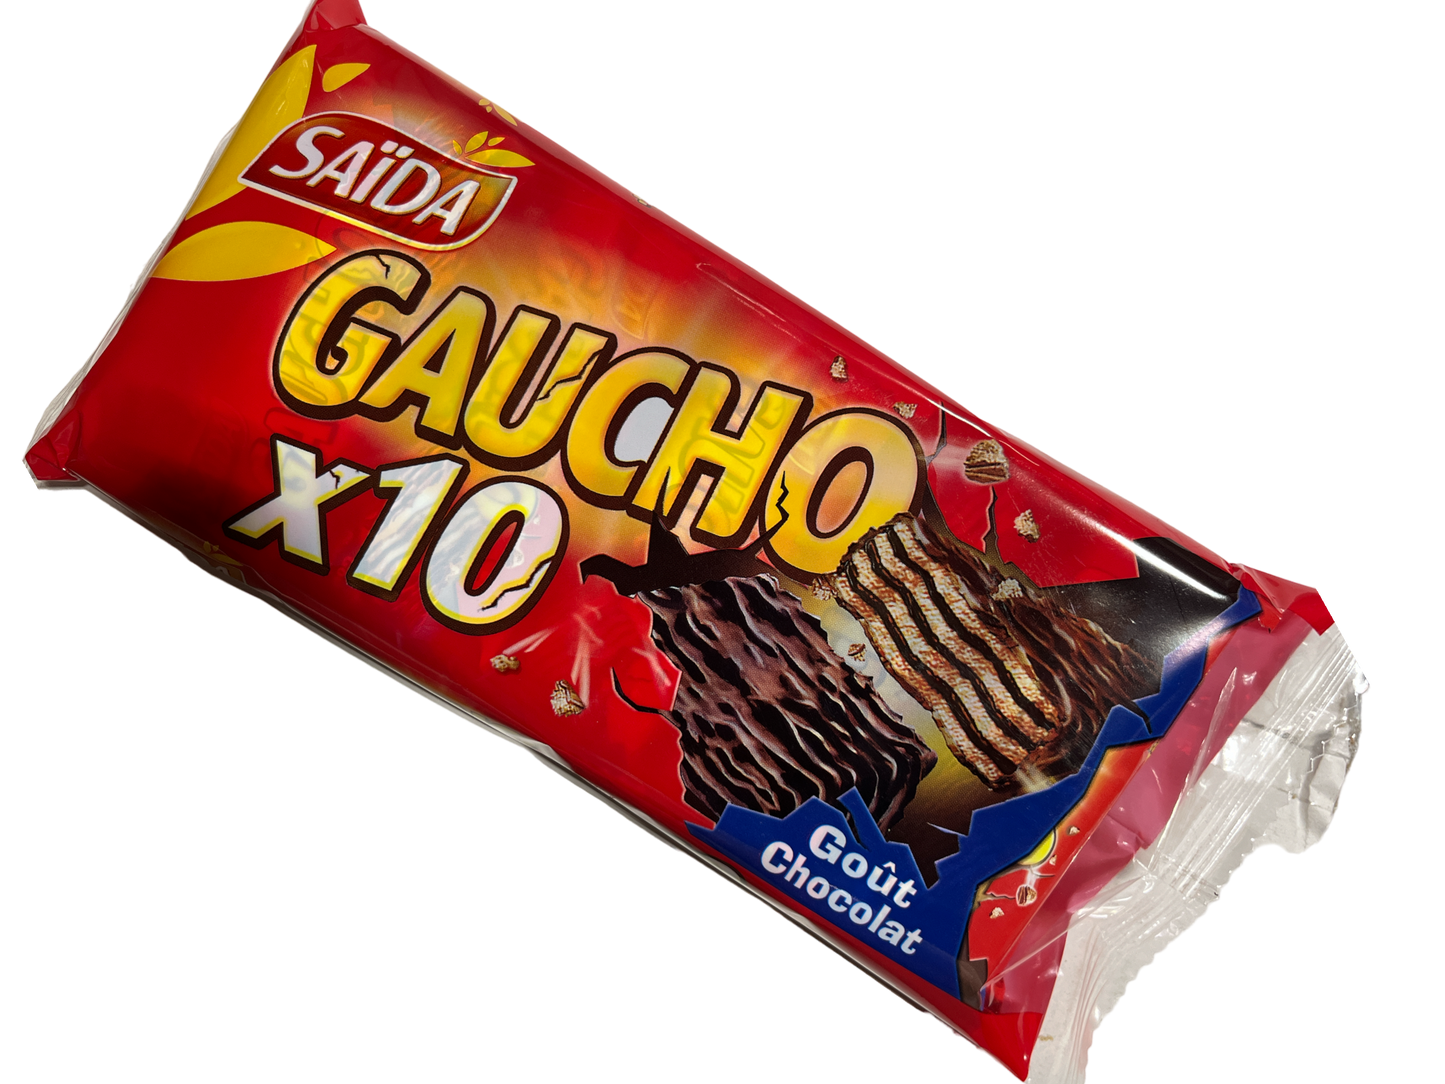 Saida Gaucho Chocolat Groupage Cookies 10x16.5g